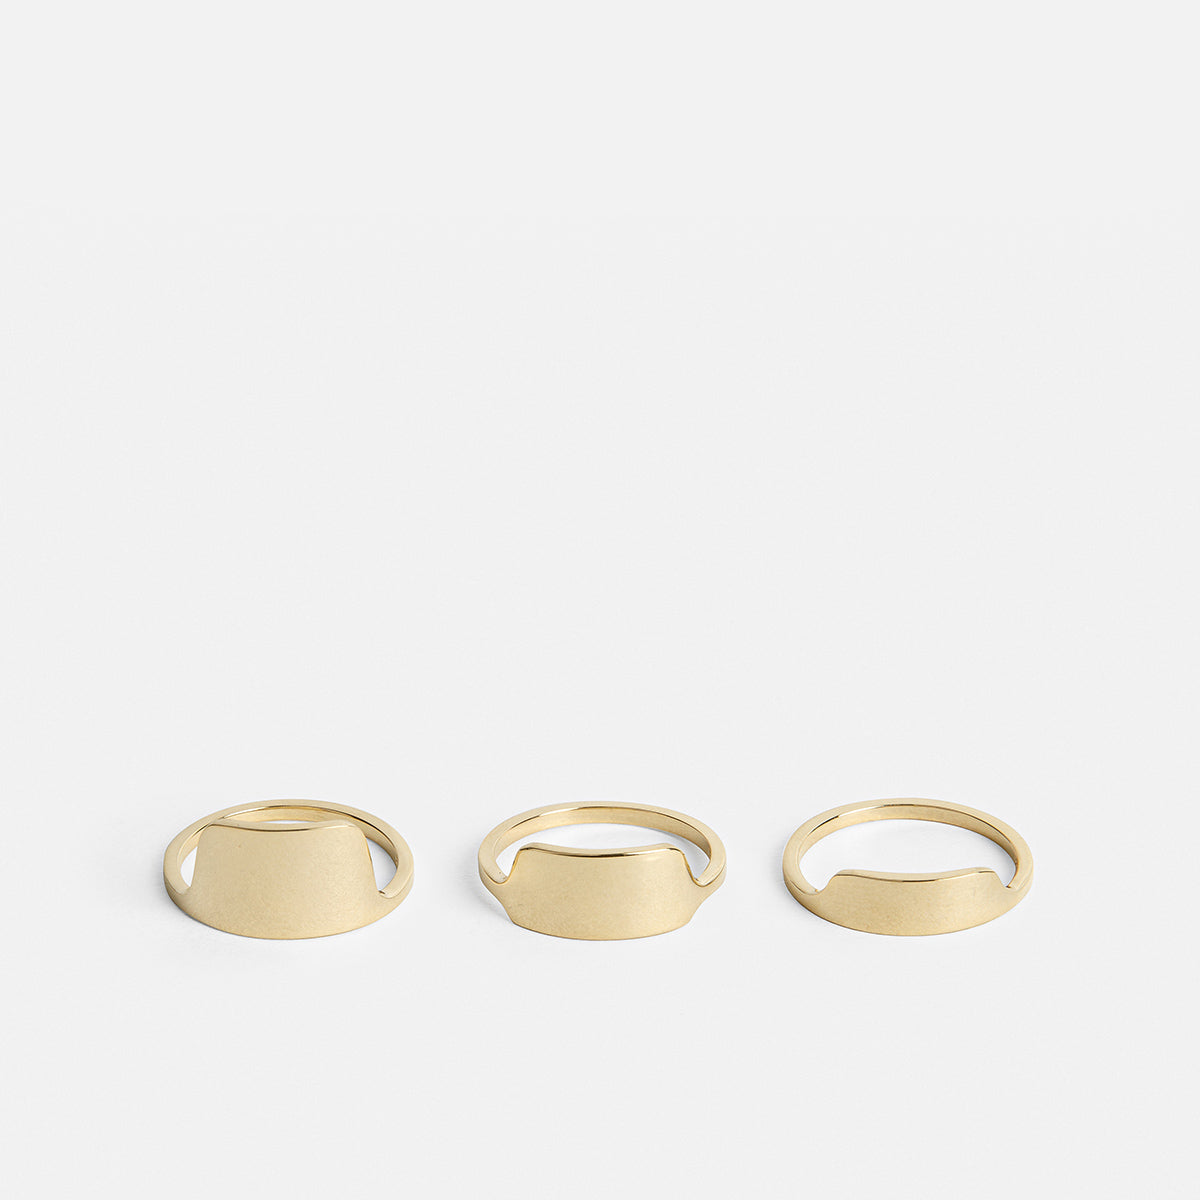 Tylu Designer Ring in 14k Gold By SHW Fine Jewelry NYC